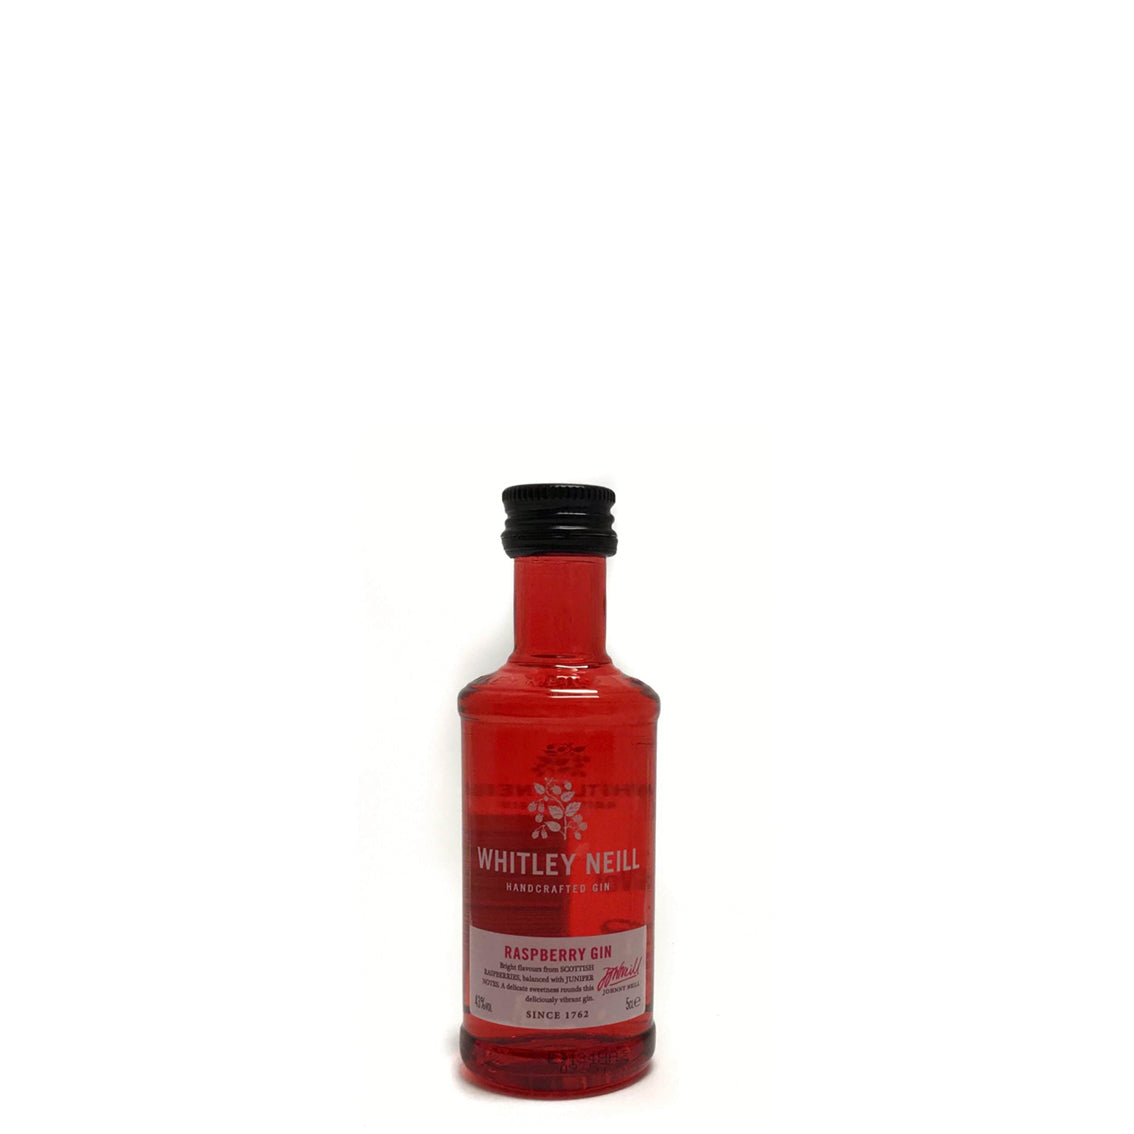 Whitley Neill Raspberry Gin, 5cl - Miniature